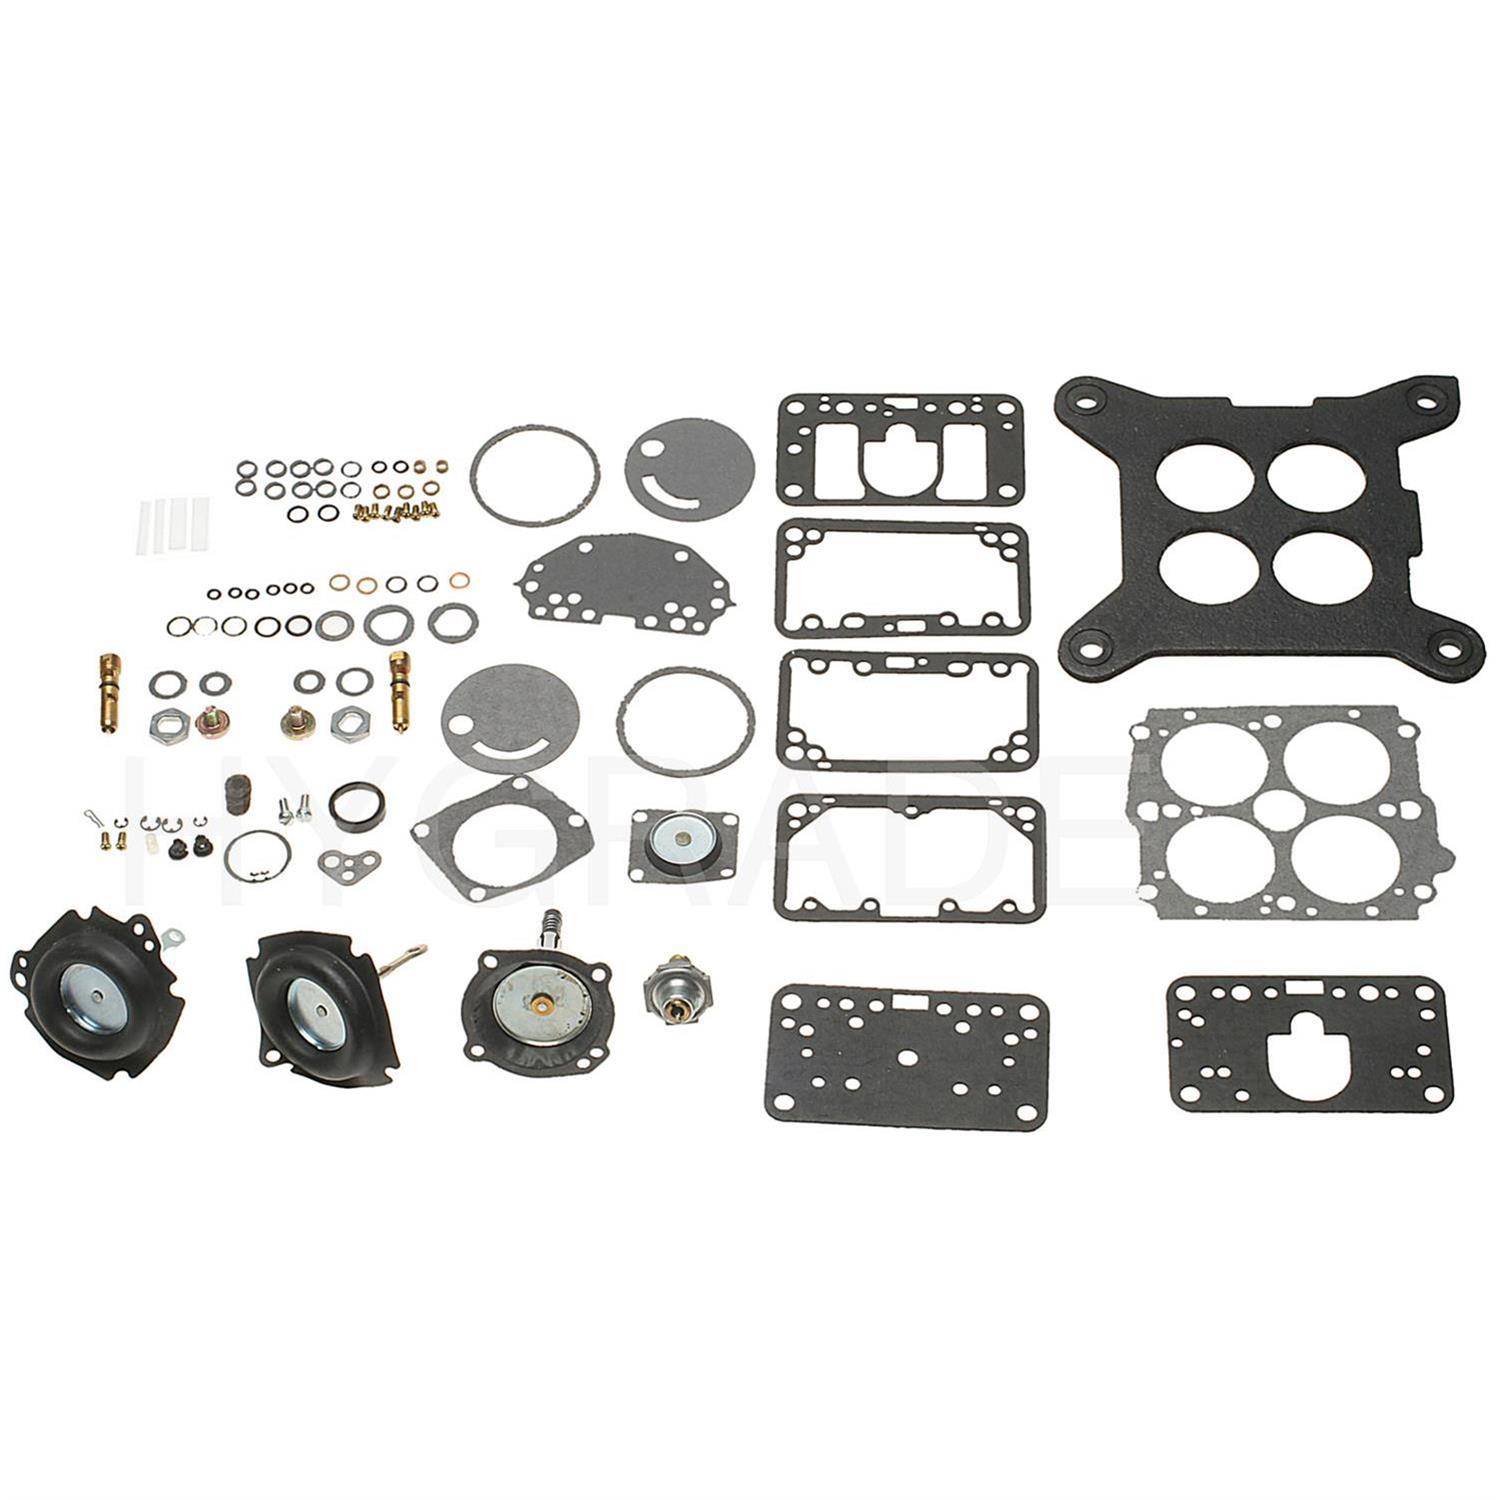 Standard Motor Products 533B Carburetor Kit